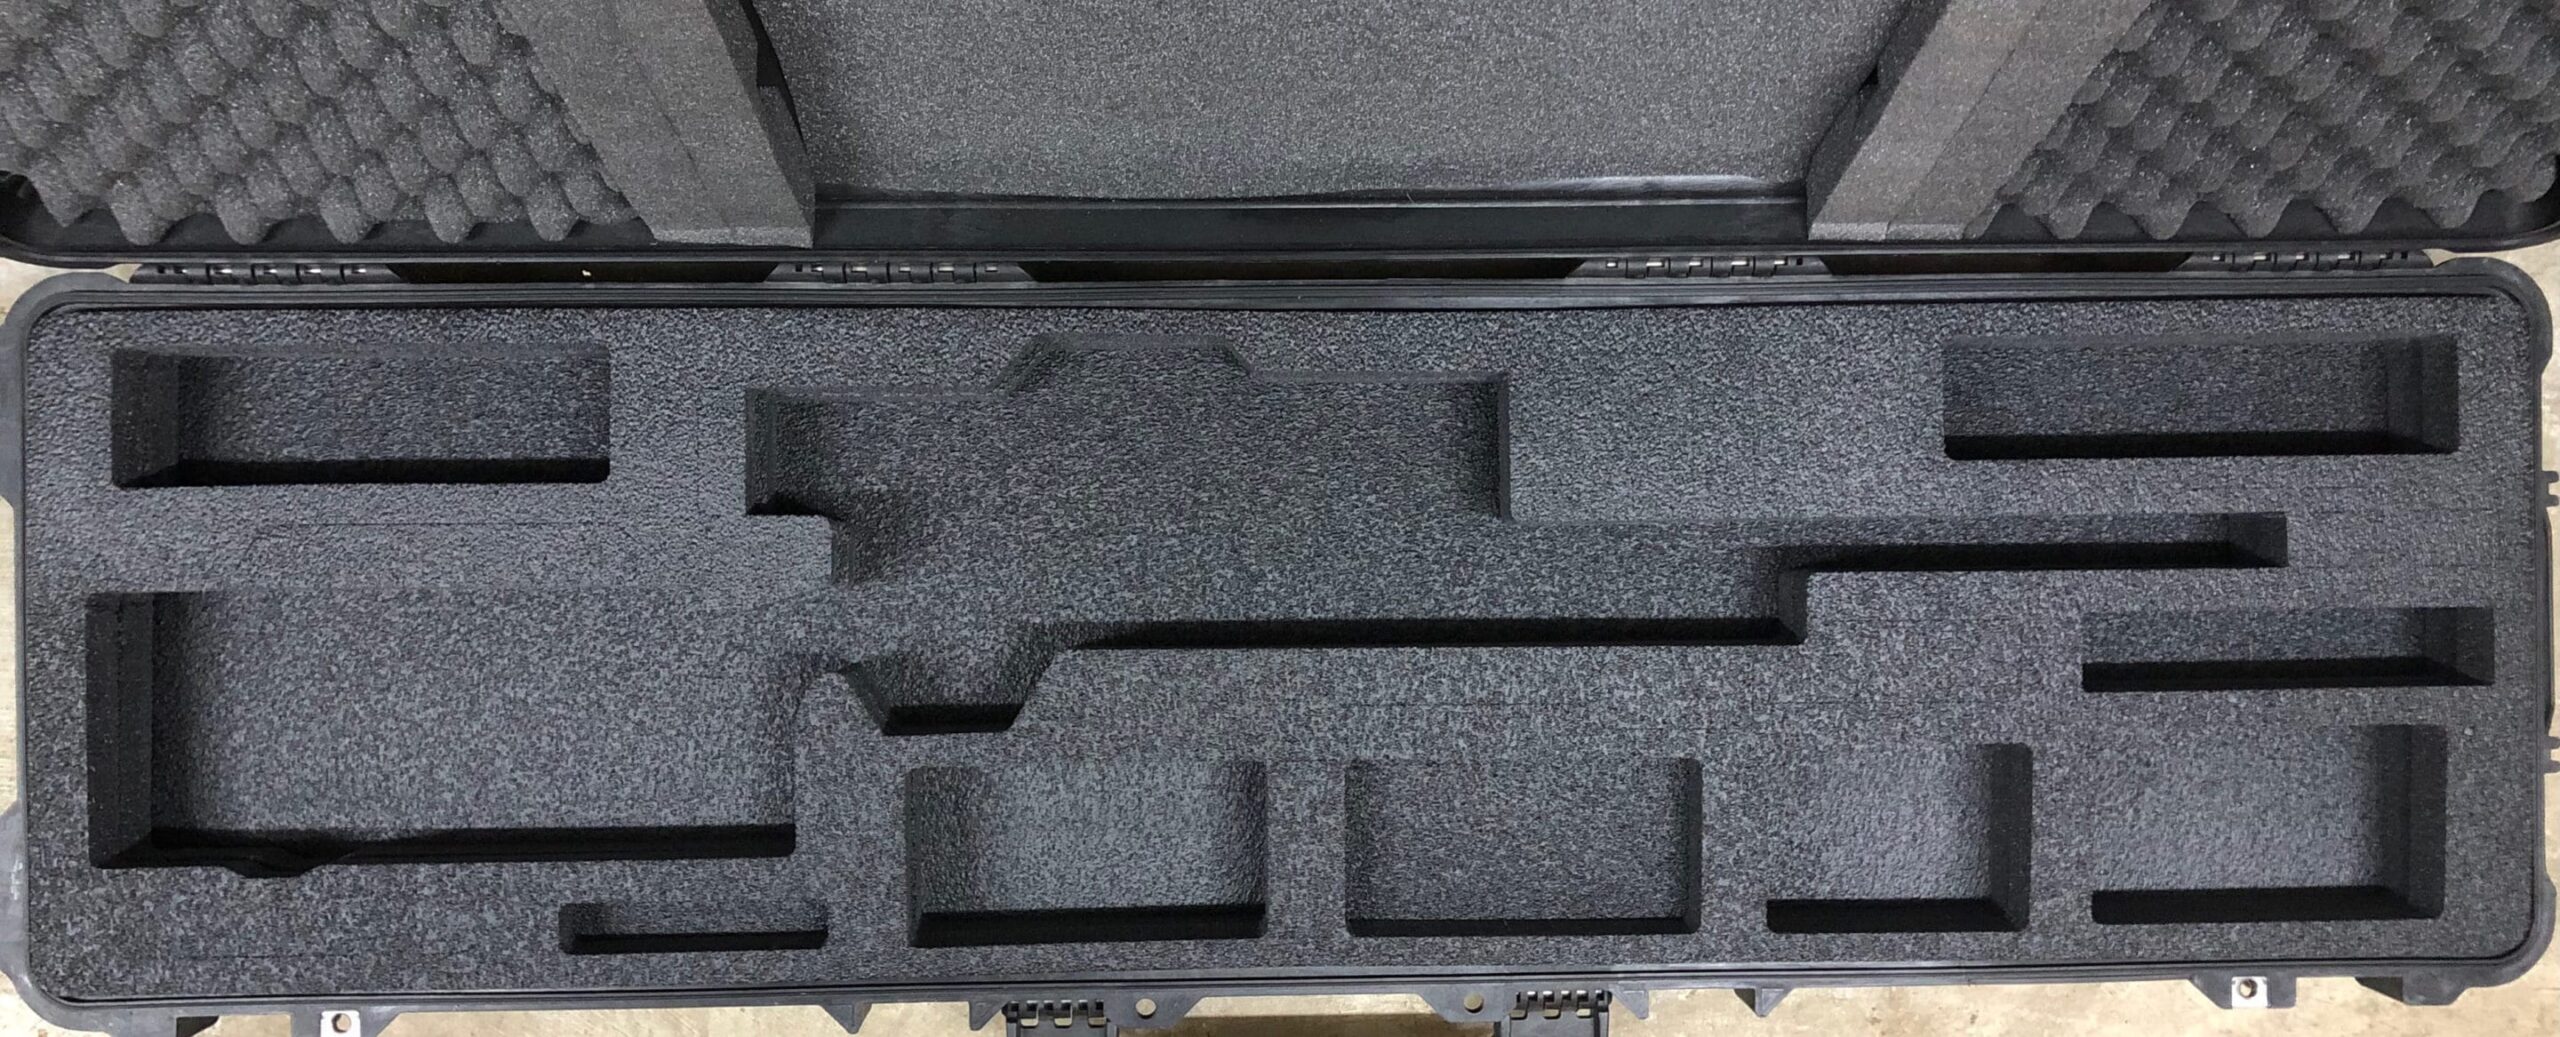 PL AMMO CAN V2 - Gunformz - Semi Custom Foam Case Kits